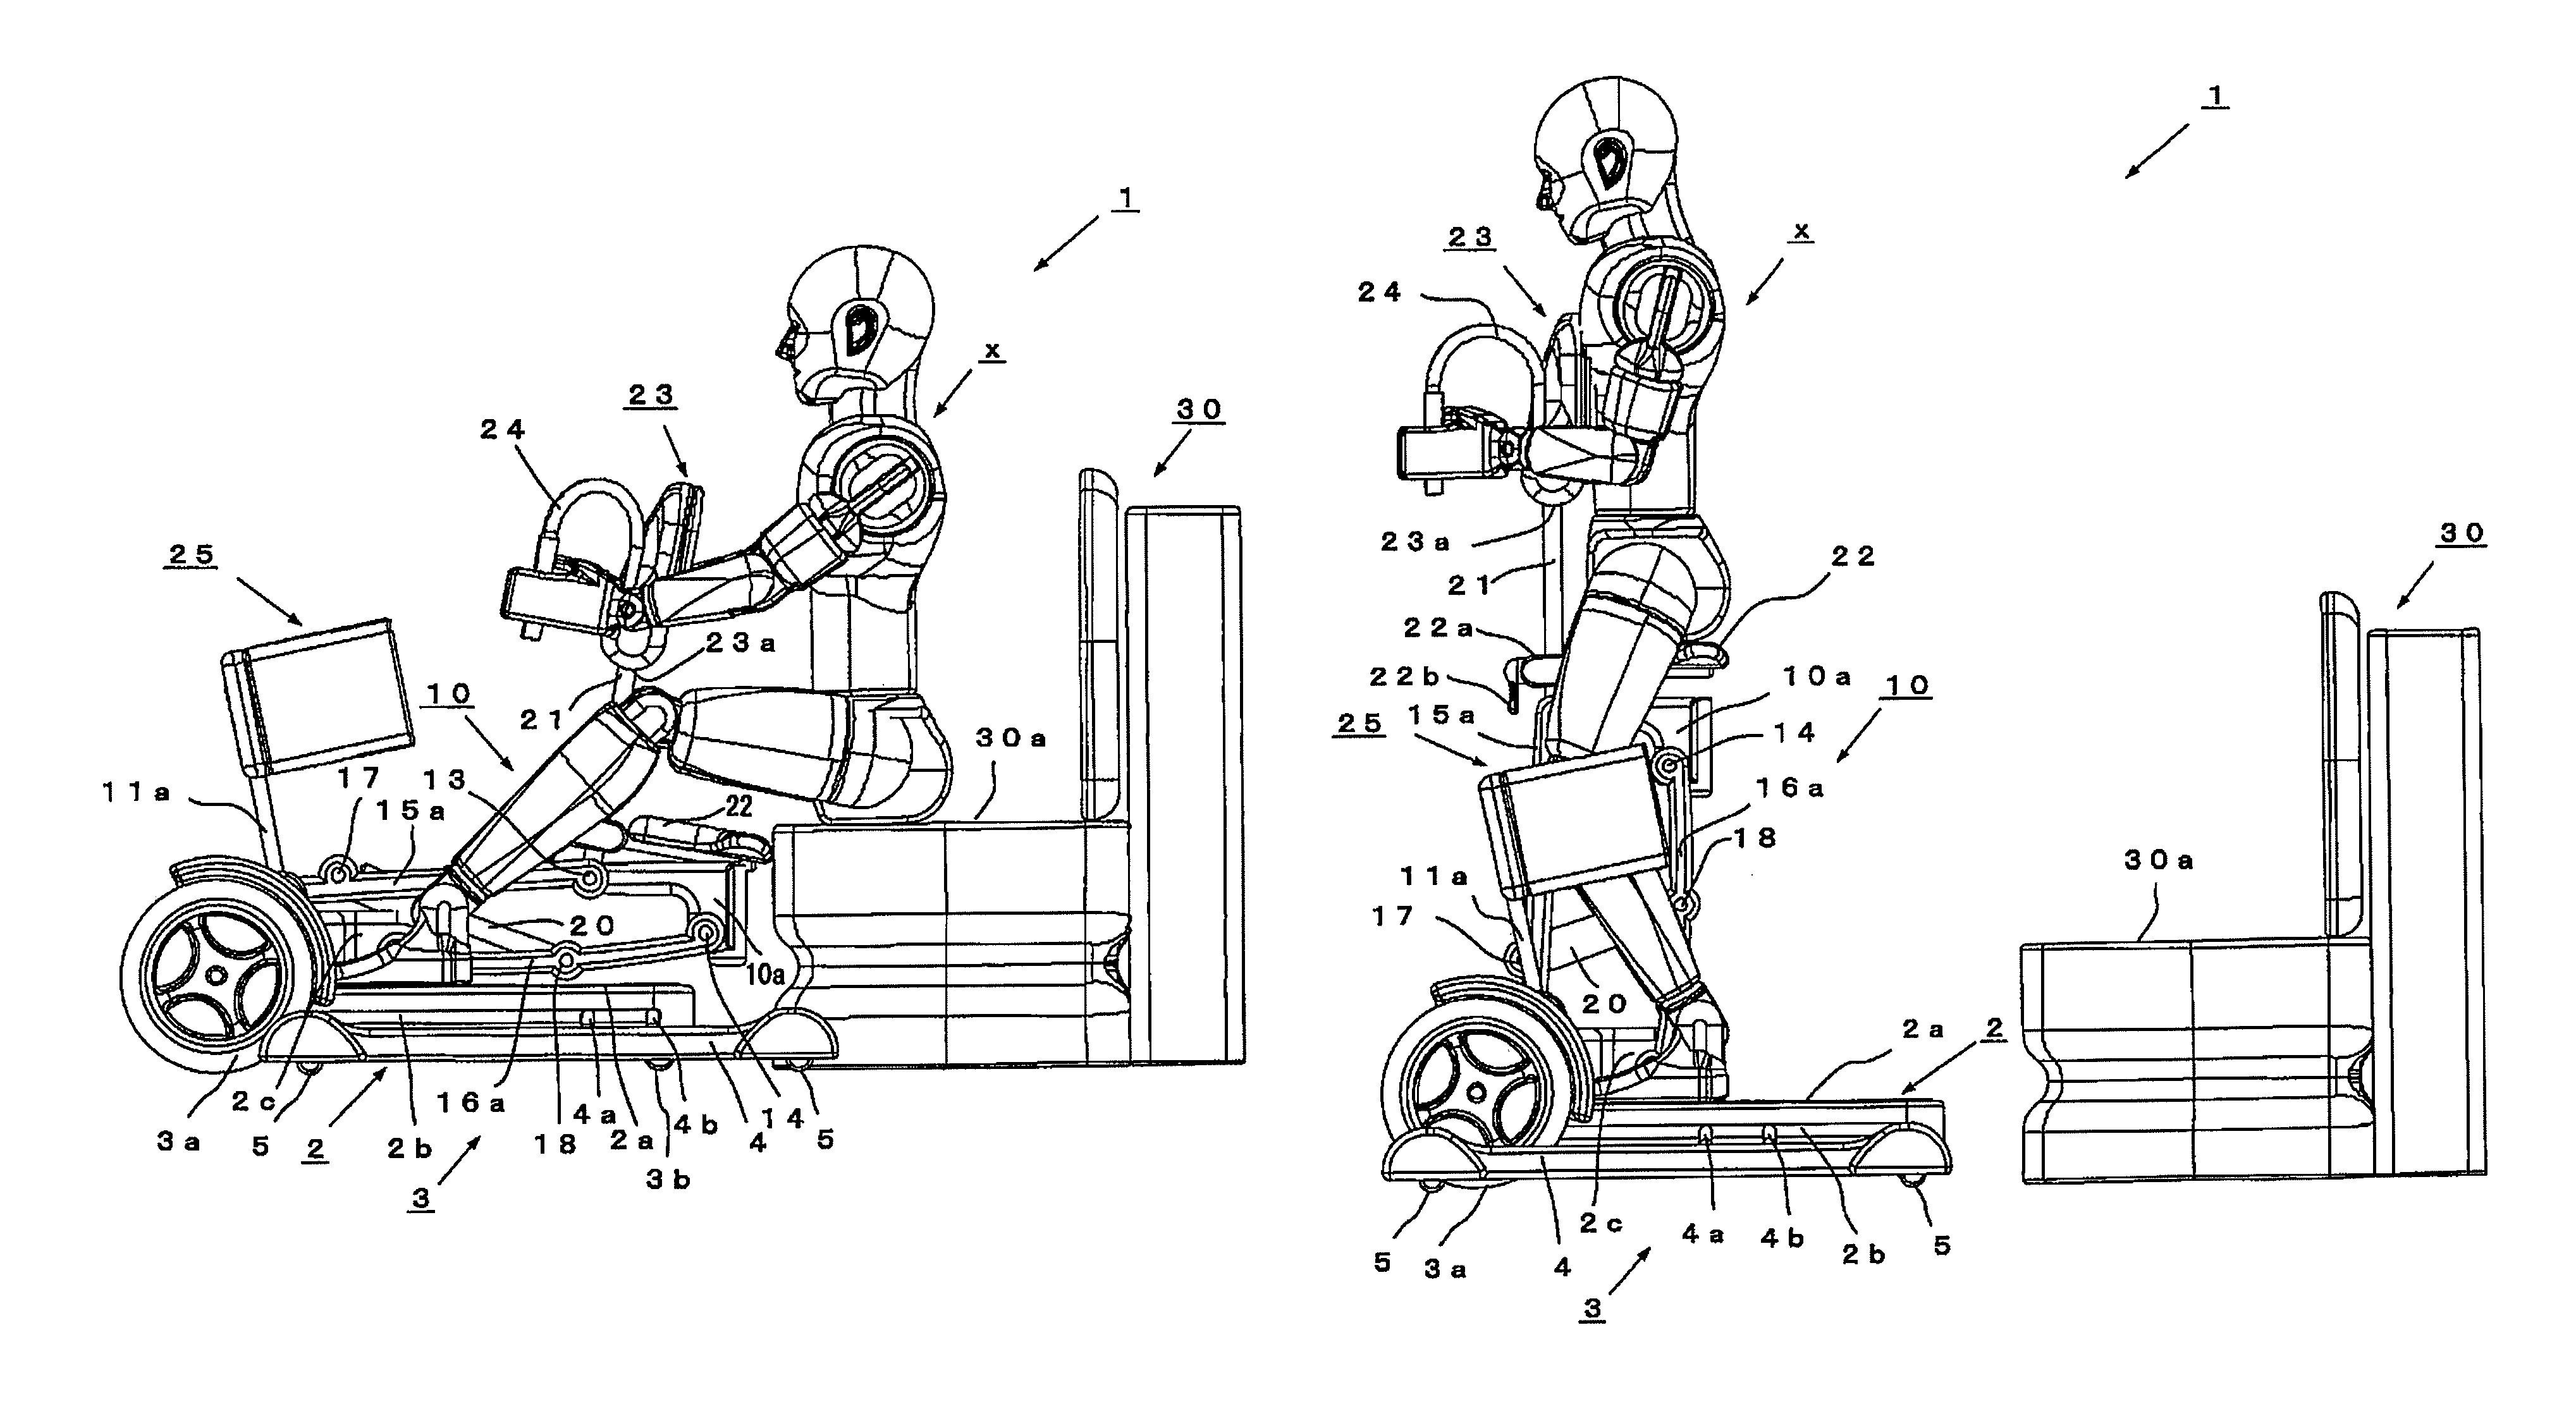 Transfer and locomotion apparatus